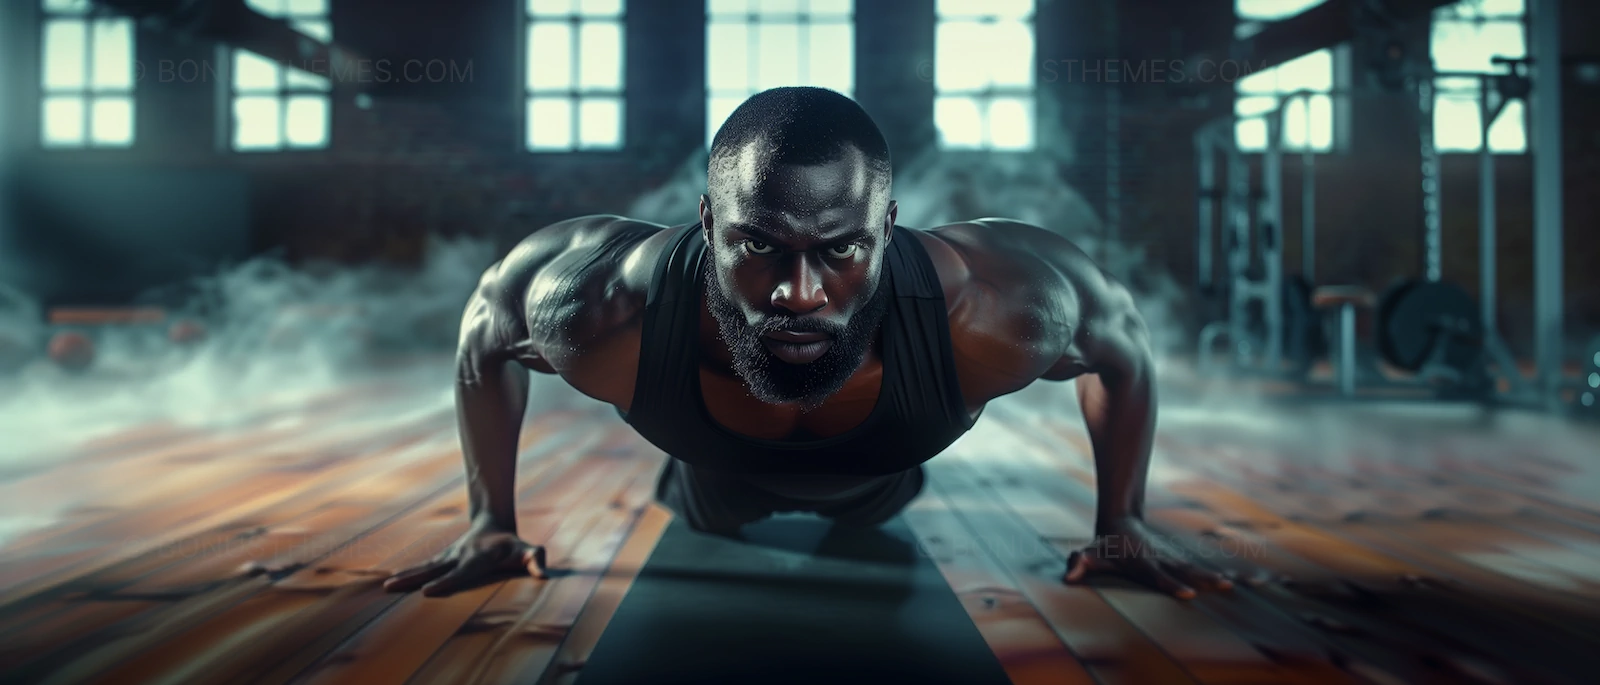 Pushing limits, muscular man's workout